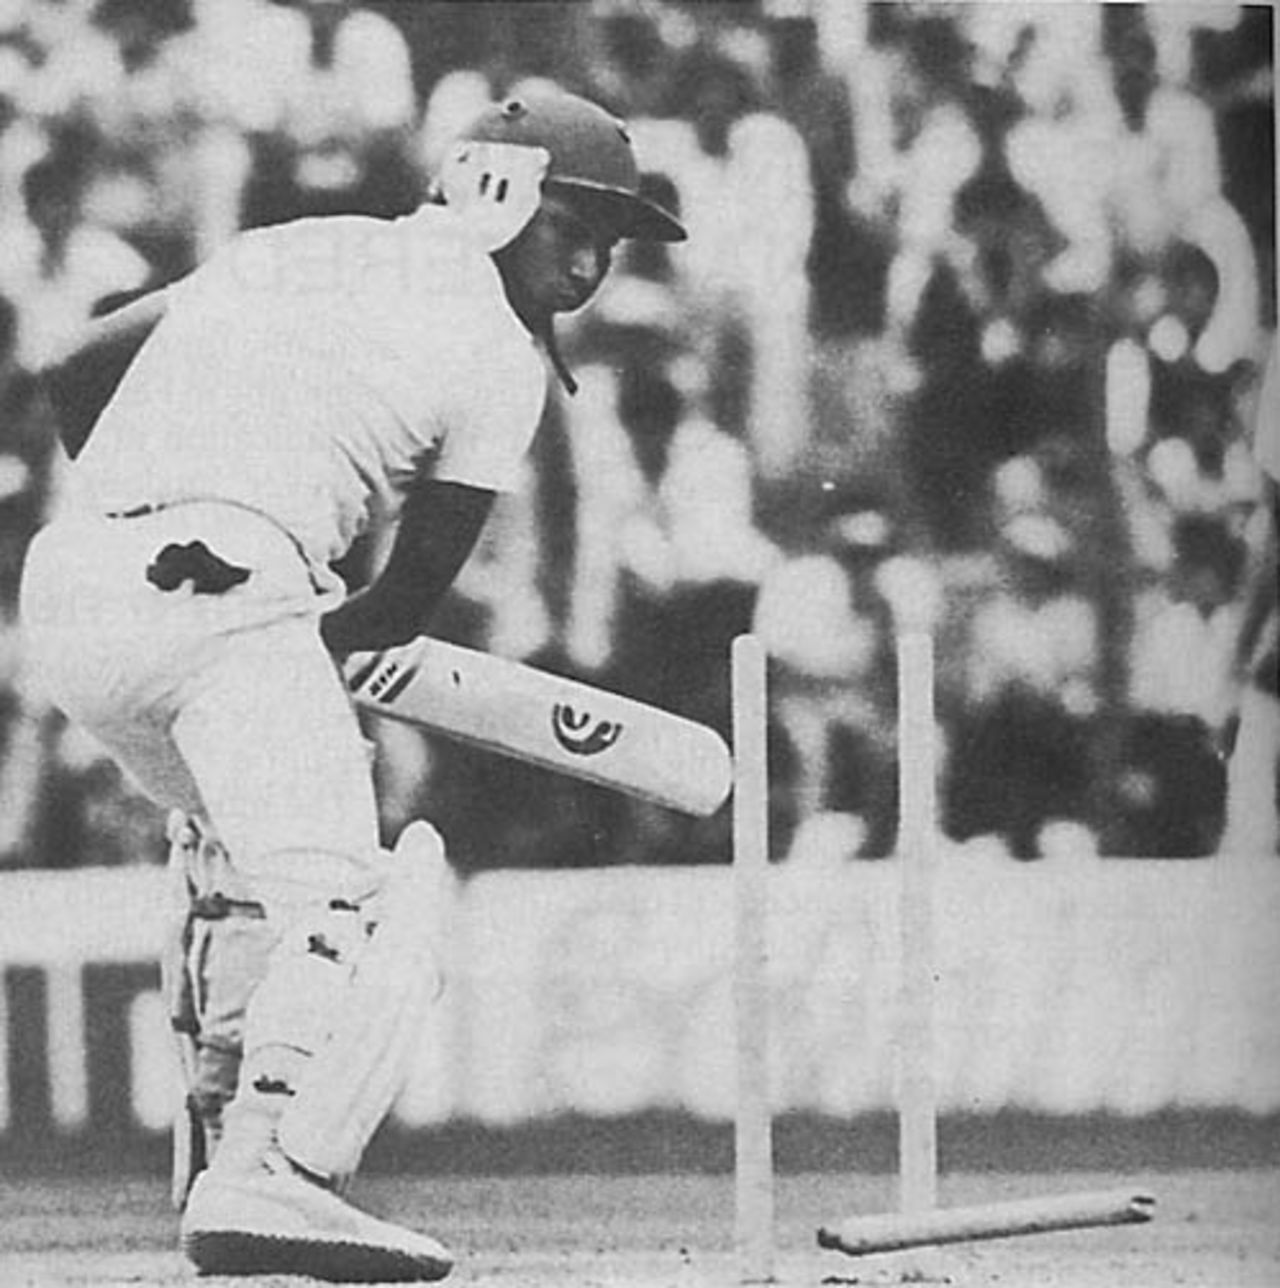 Mohinder Amarnath is bowled by Mudassar Nazar for 4, India v Pakistan, Bangalore, September 1983